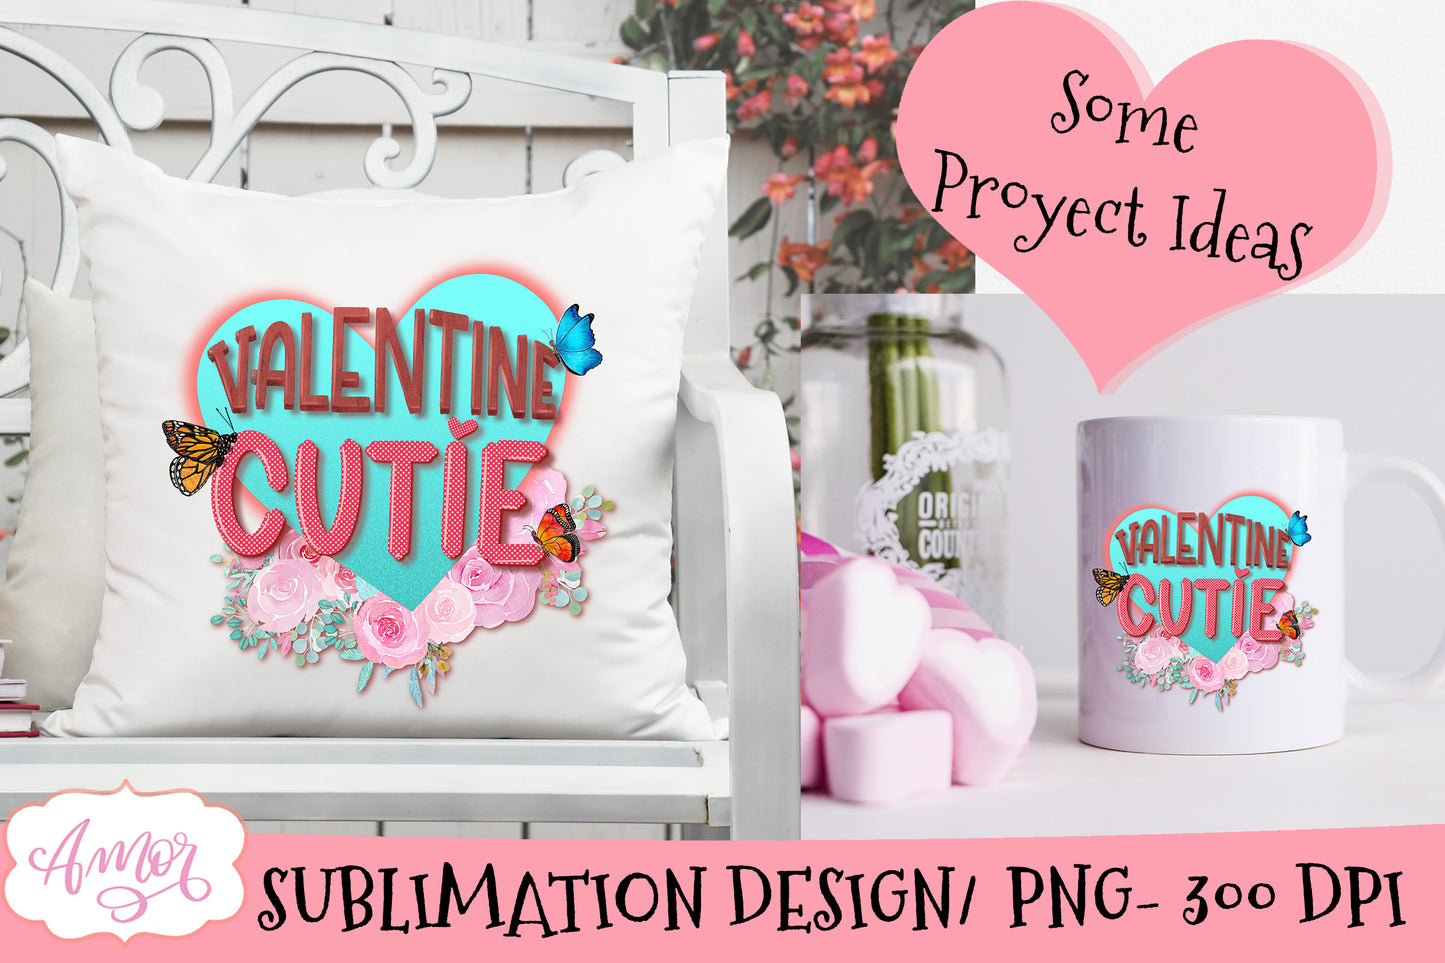 Valentine Cutie PNG digital graphic for sublimation